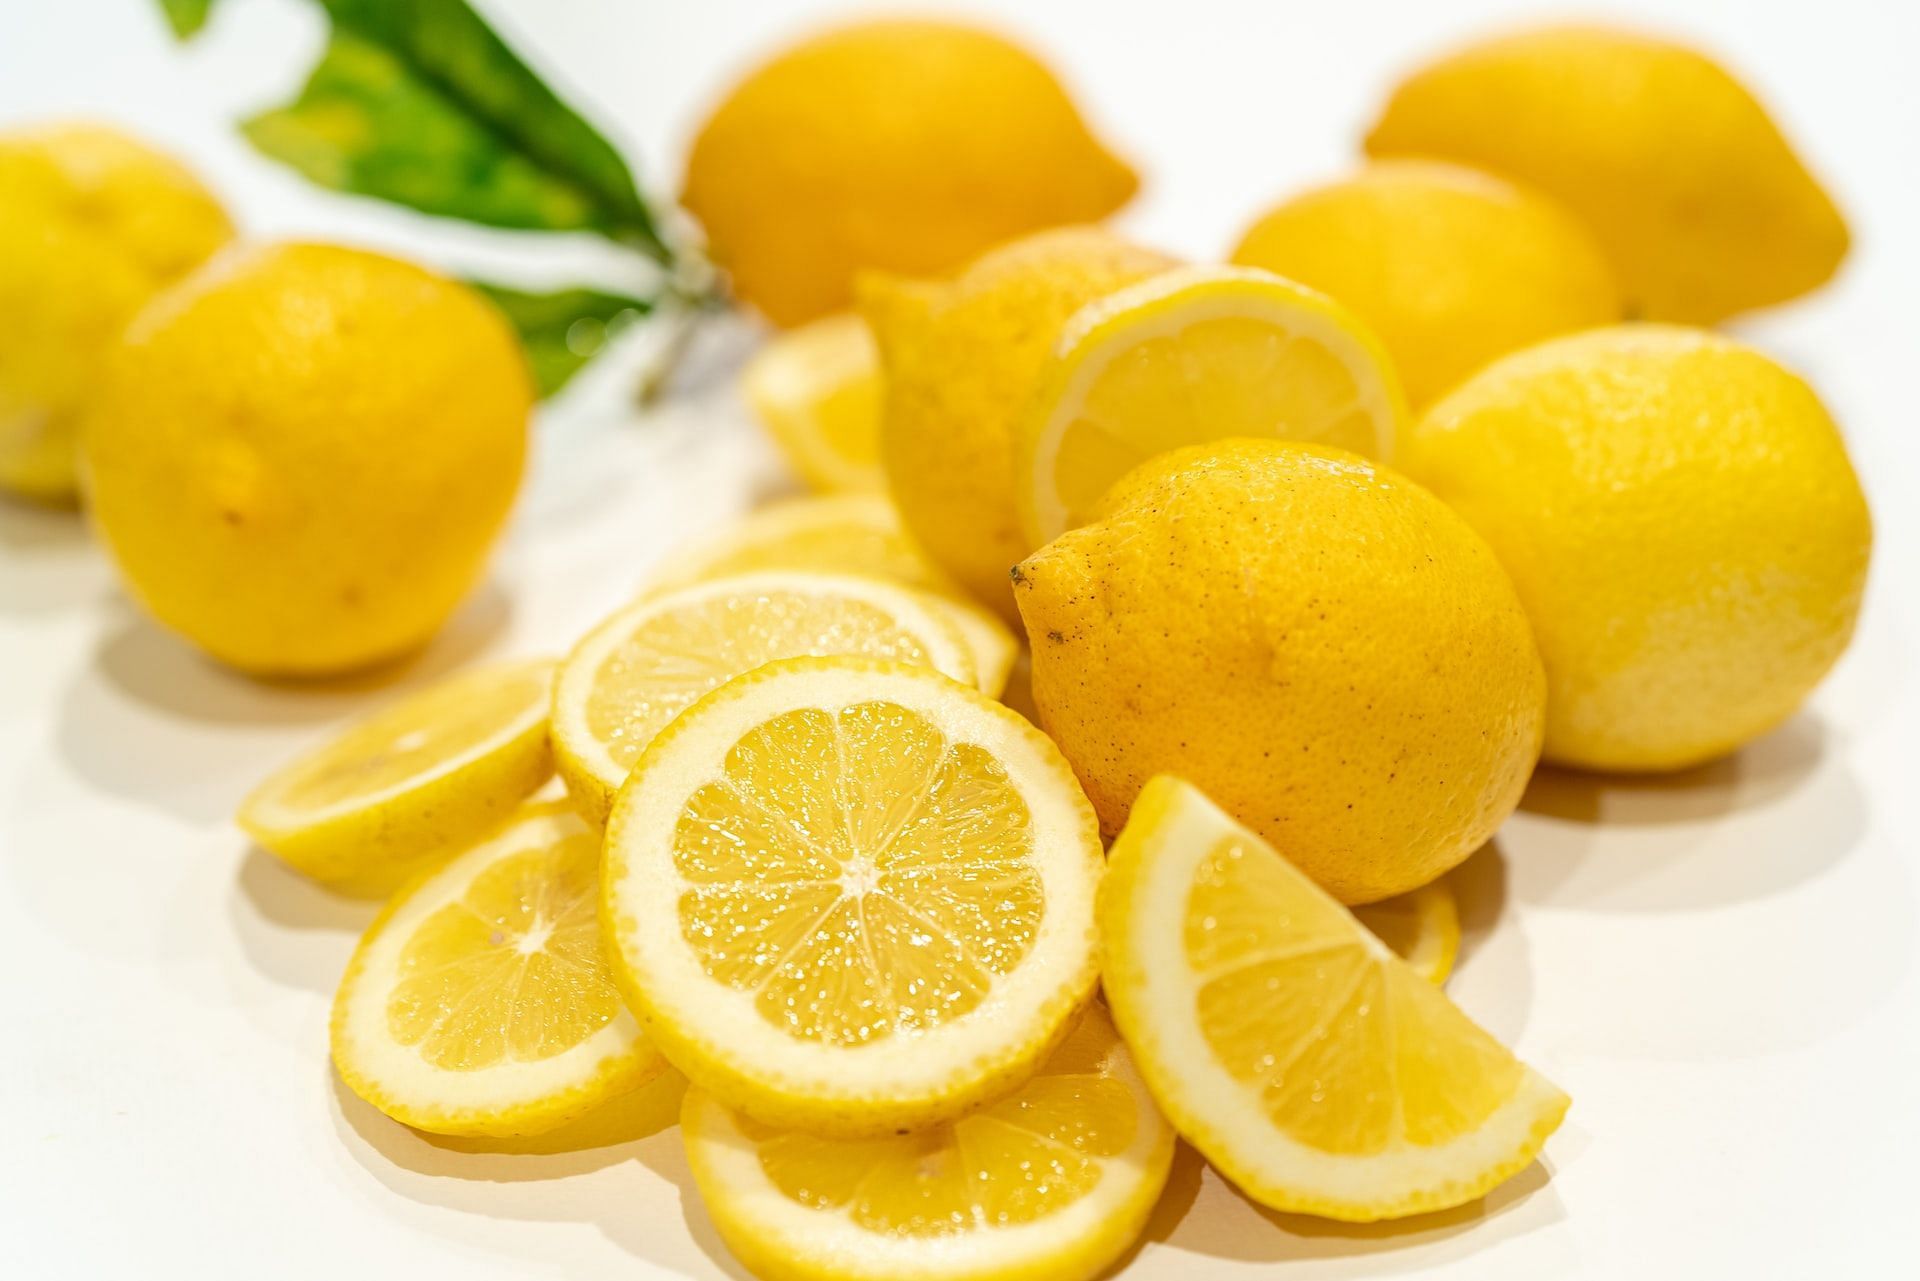 Lemons (Photo by eggbank on Unsplash)